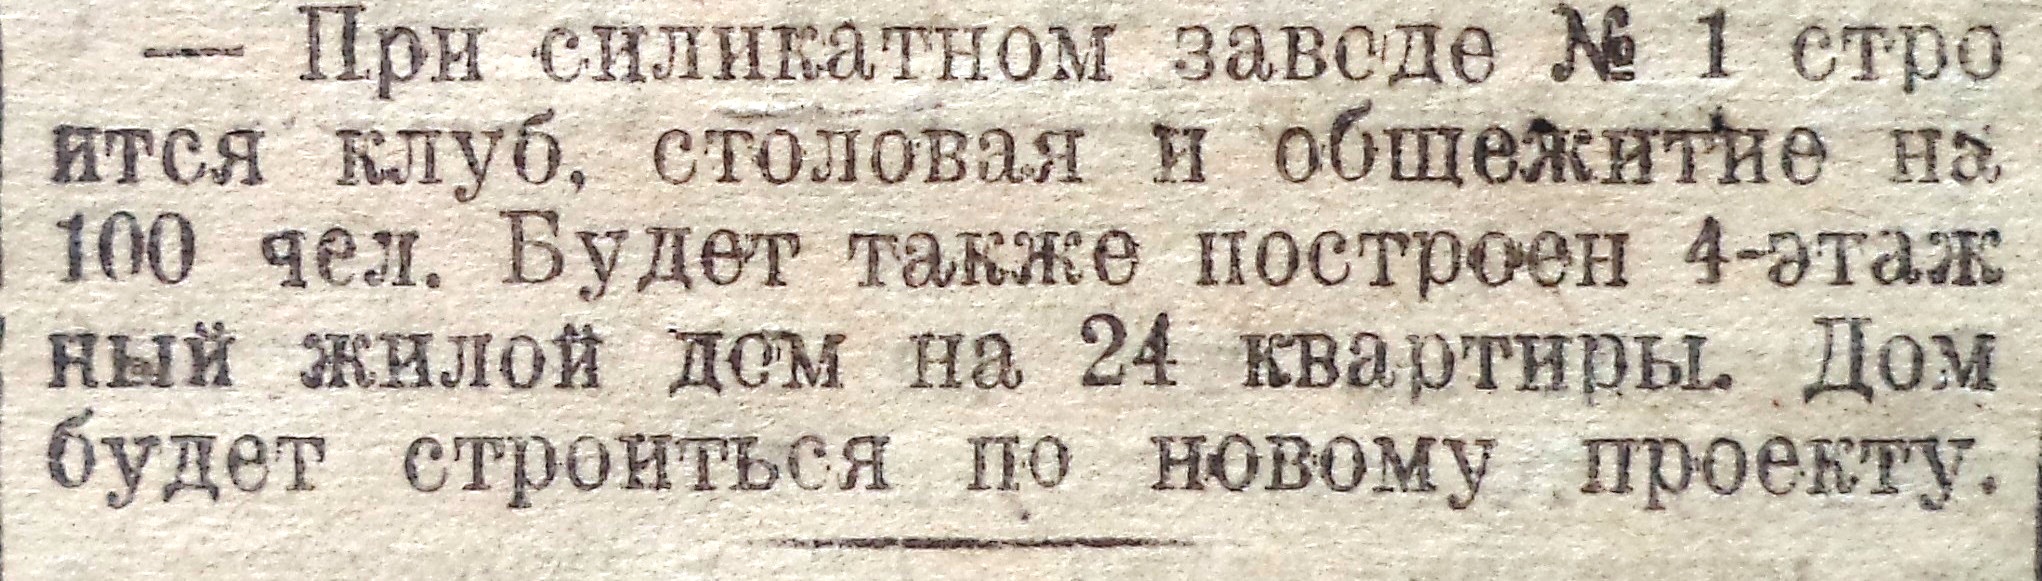 Соколова-ФОТО-13-РабСам-1932-09-14-о доставке кирпича